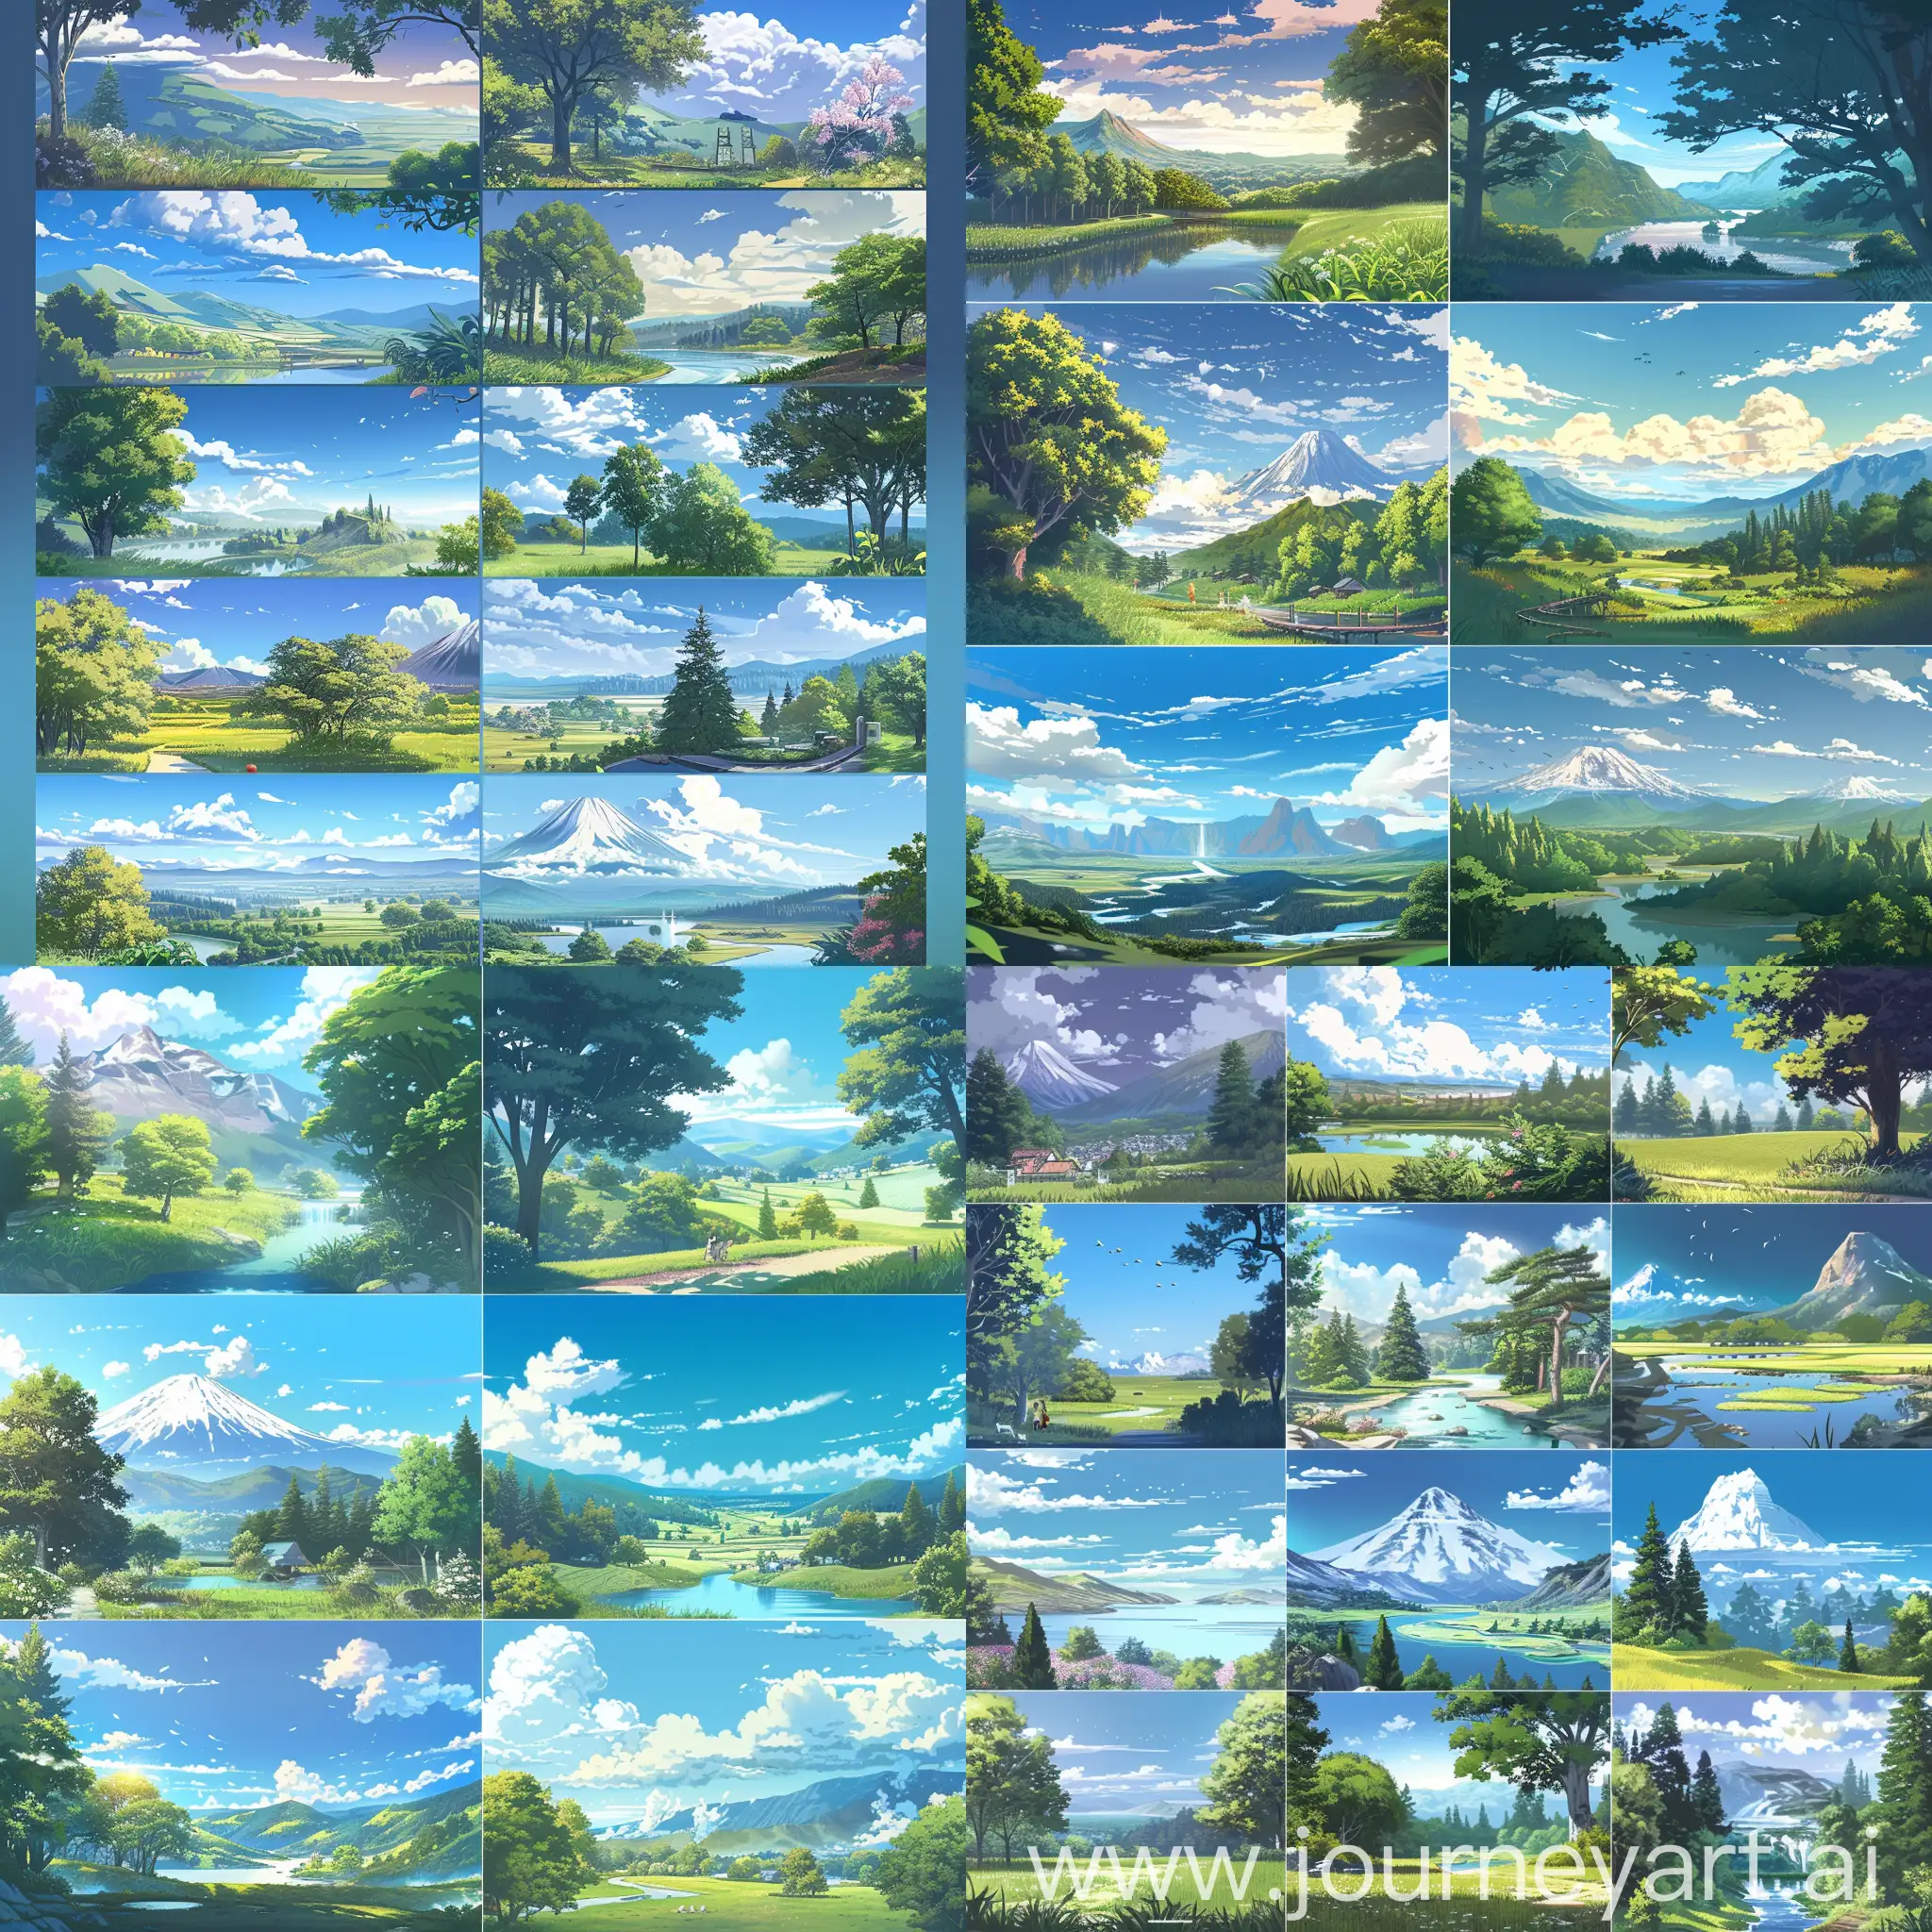 Tranquil-Anime-Scenery-Serene-Nature-Landscapes-Inspired-by-Makoto-Shinkai